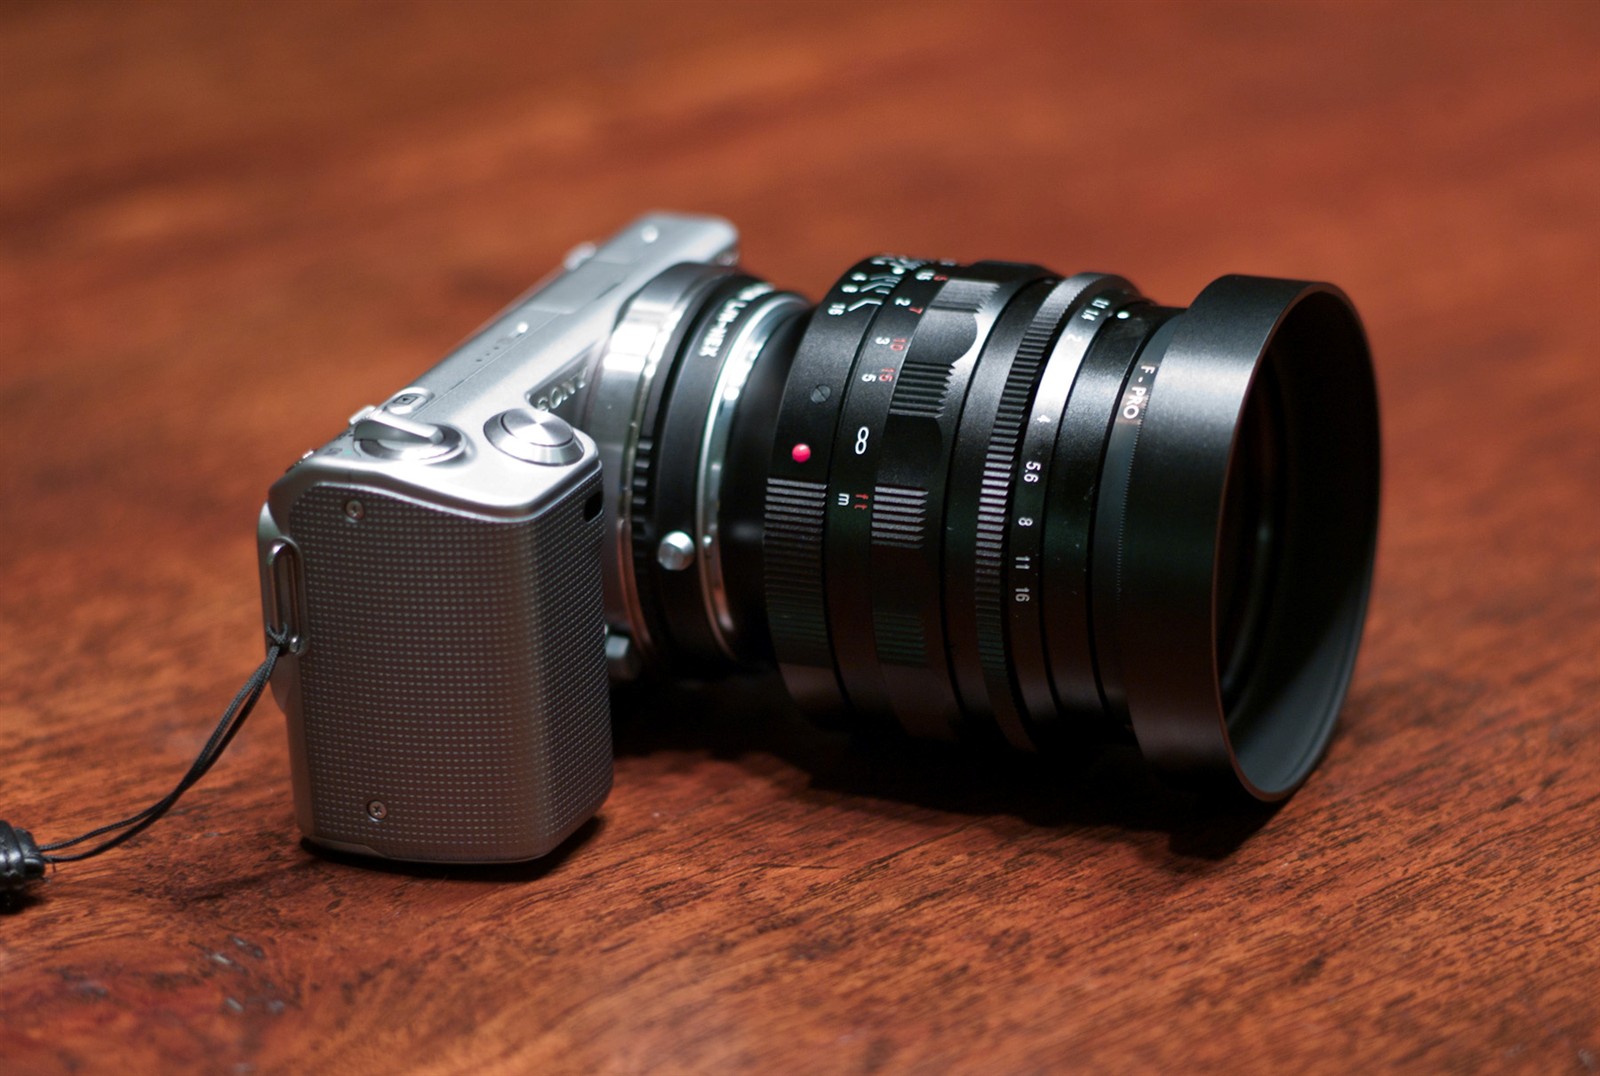 Sony NEX-5 with a Nokton vs a Leica M8 with a Summicron 50